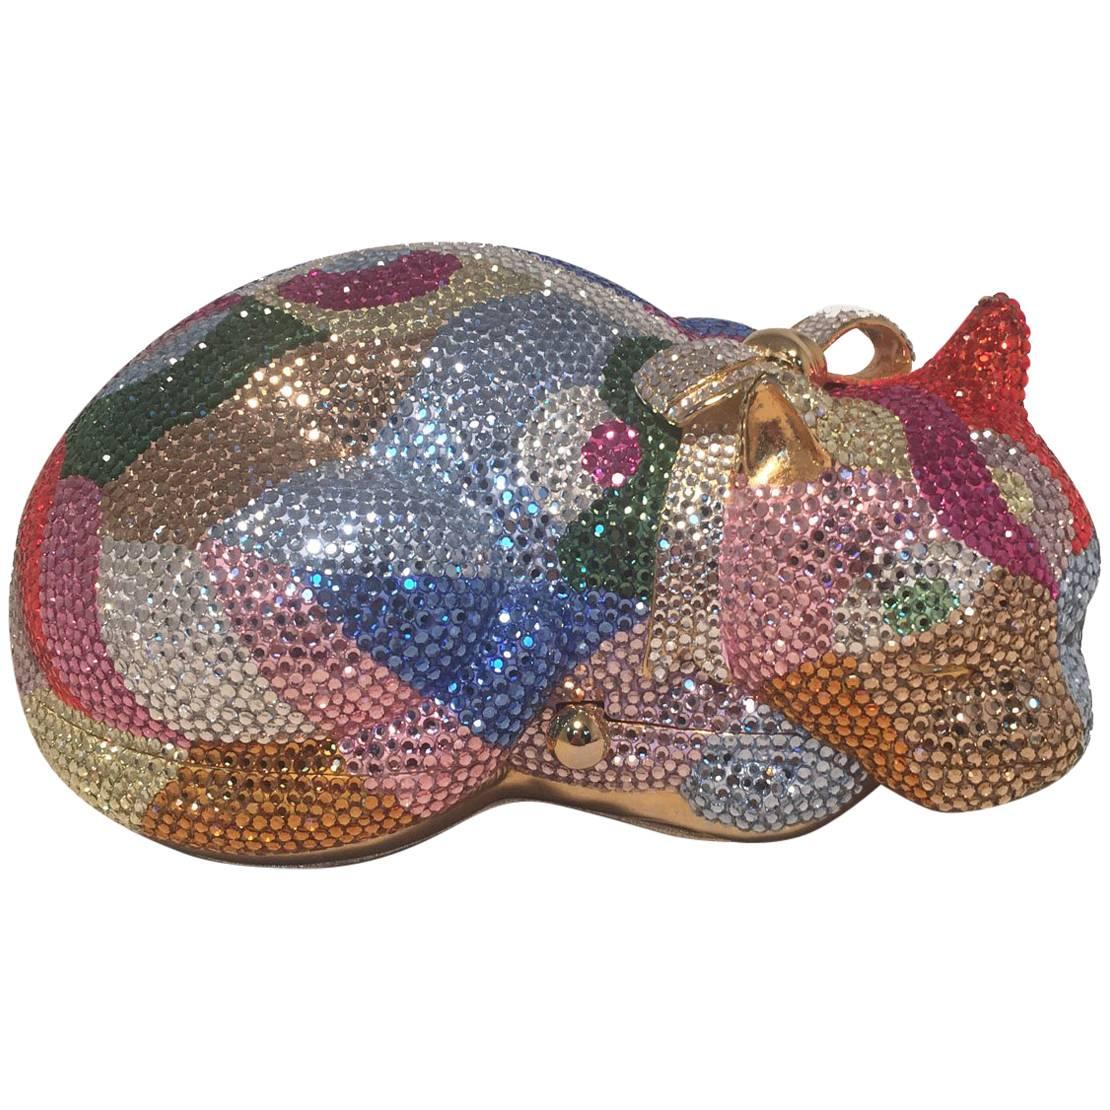 Judith Leiber Swarovski Crystal Colorful Cat Minaudiere Evening Bag